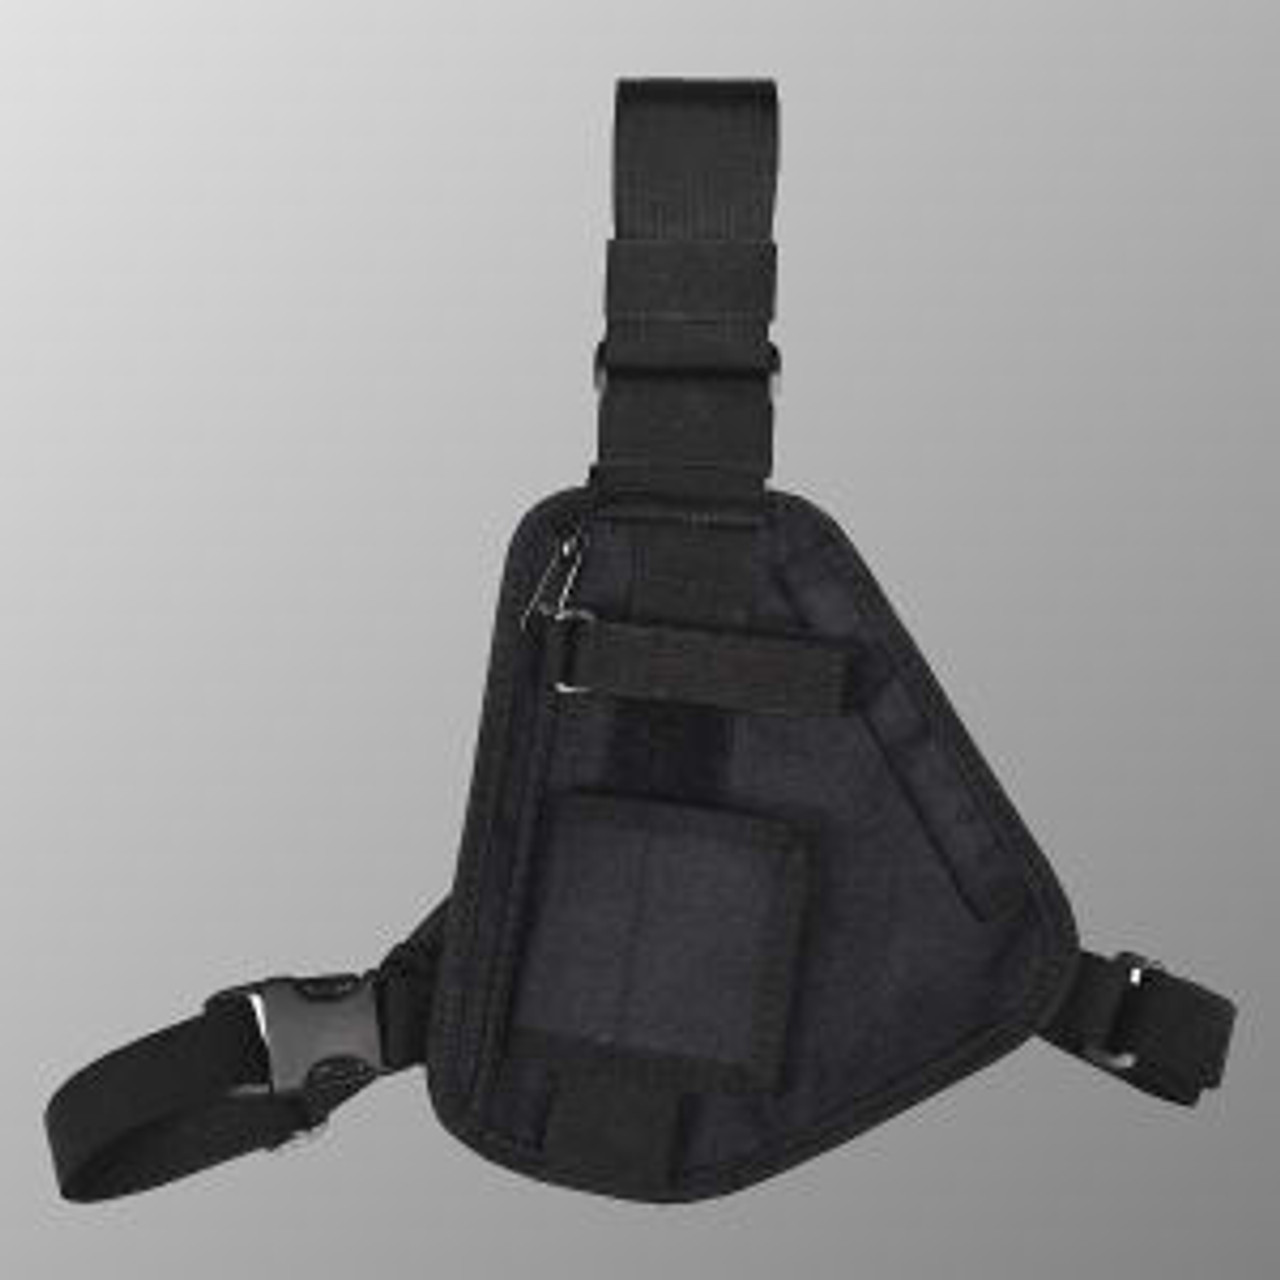 Motorola P110 3-Point Chest Harness - Black